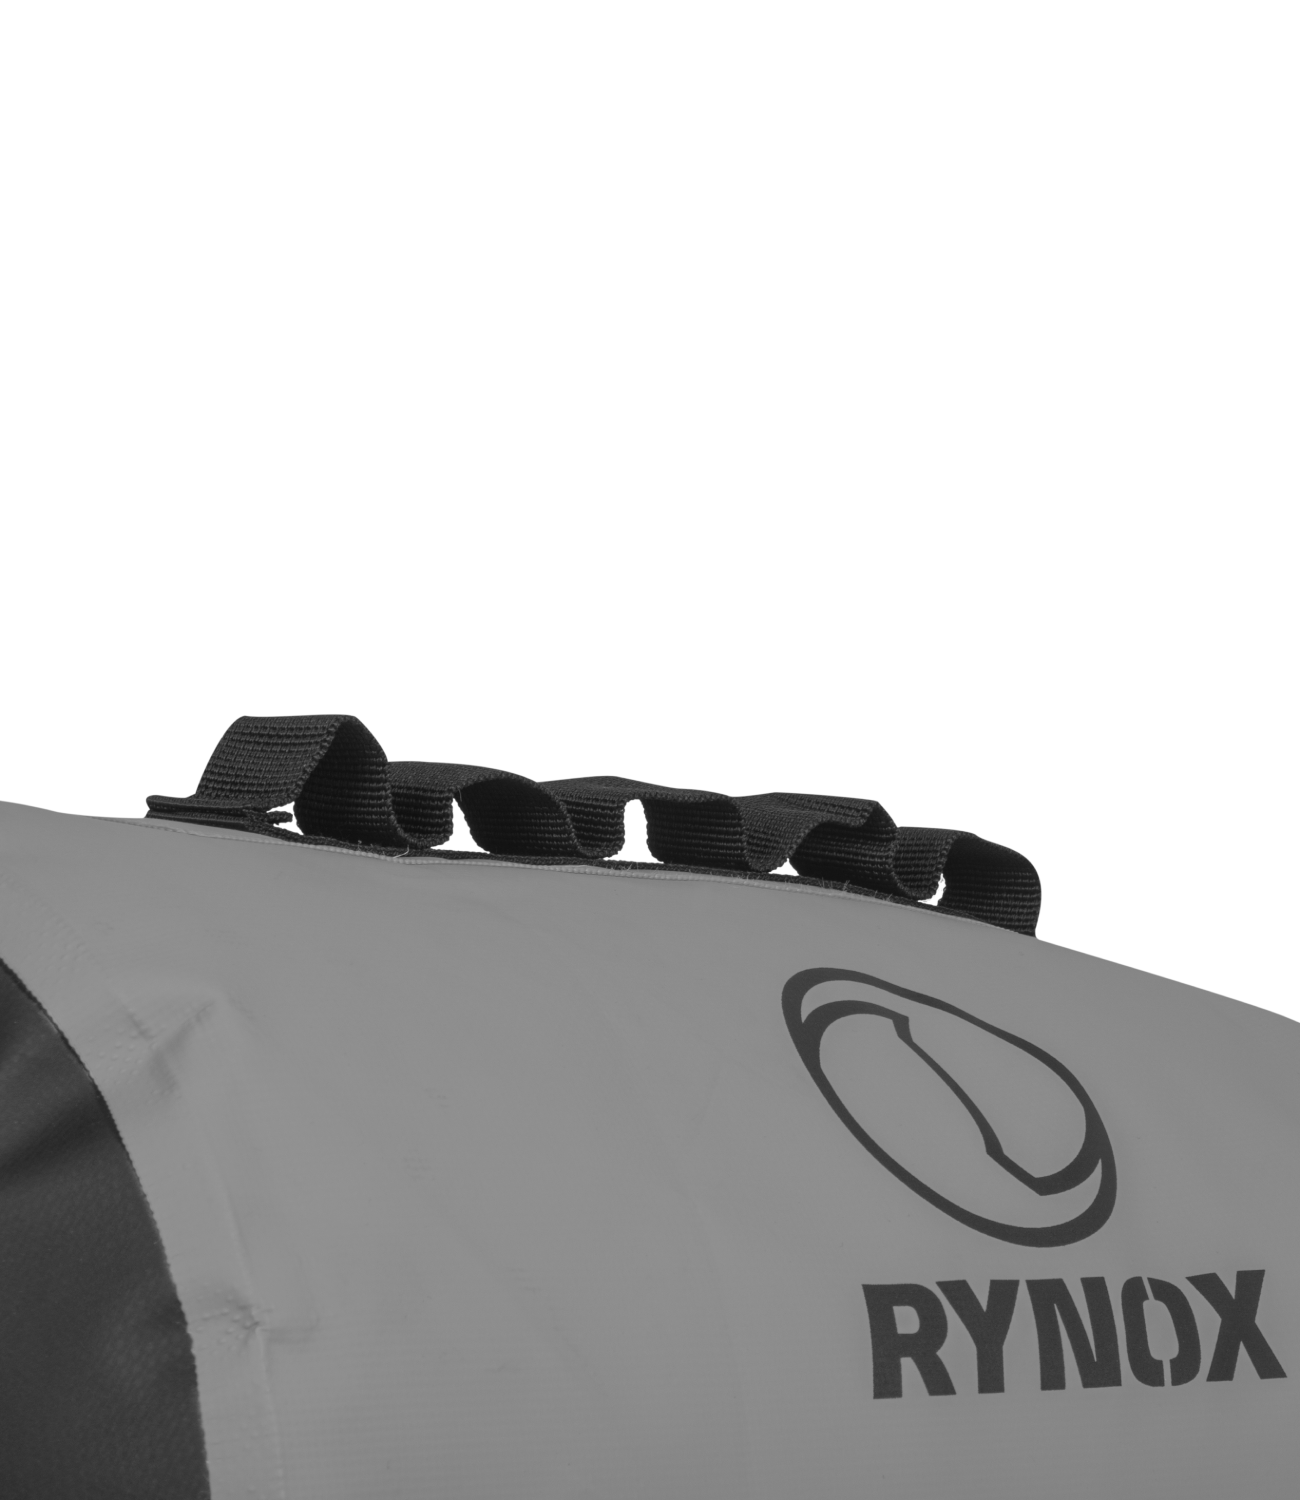 Rynox Expedition Dry Bag 2 - Stormproof - Destination Moto